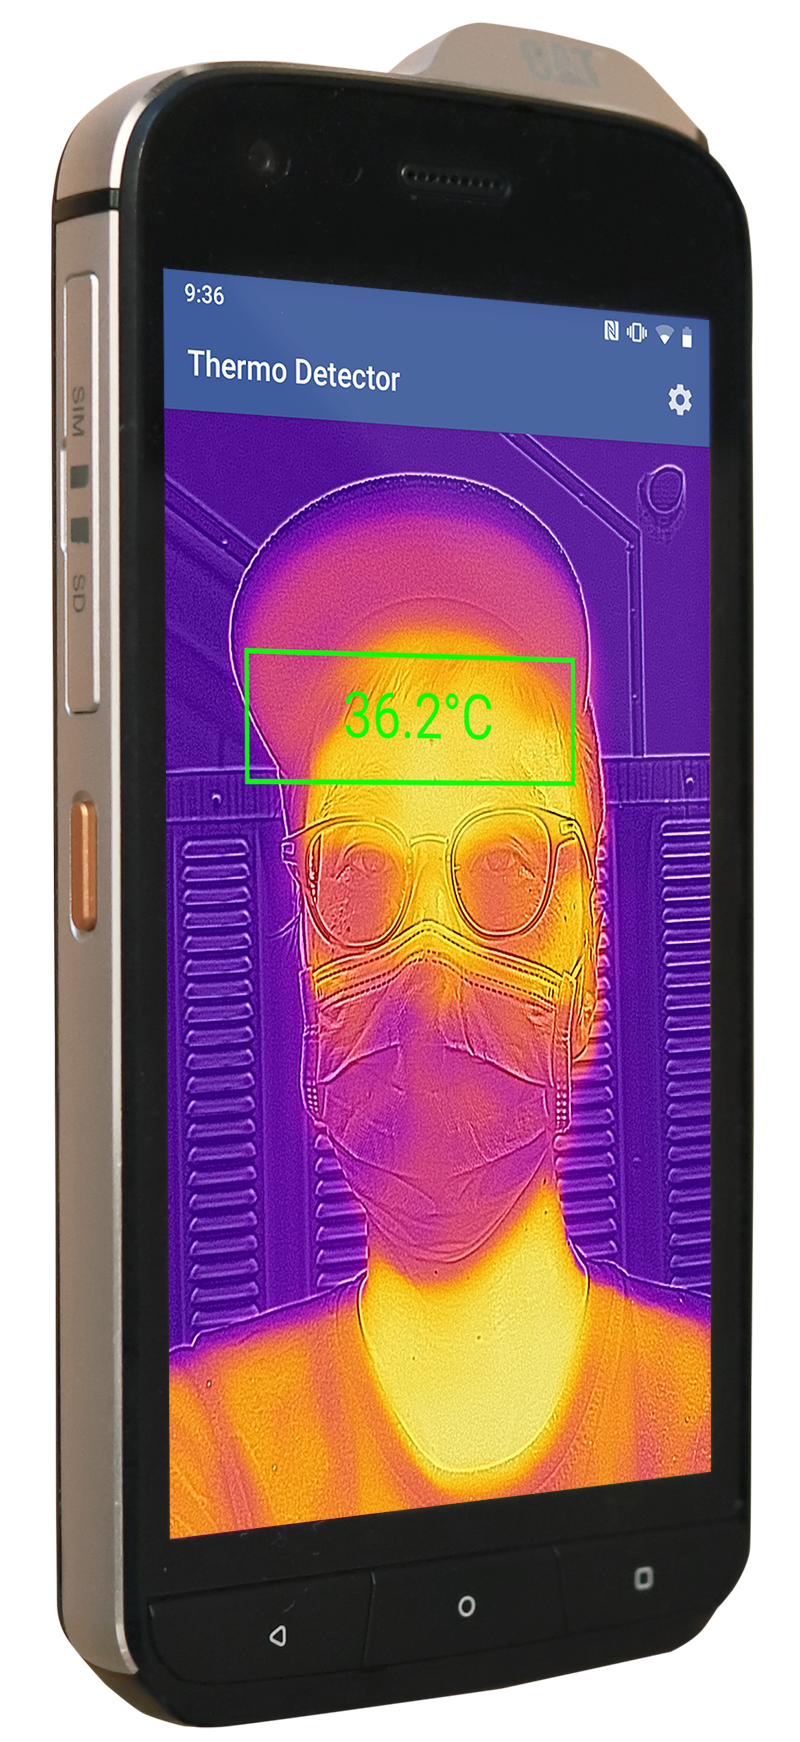 Thermo Detector 体温をスマホ Cat S61とカメラアプリで非接触計測して音声でお知らせします Factory4 デザインとテクノロジーで新しい価値を創り出す